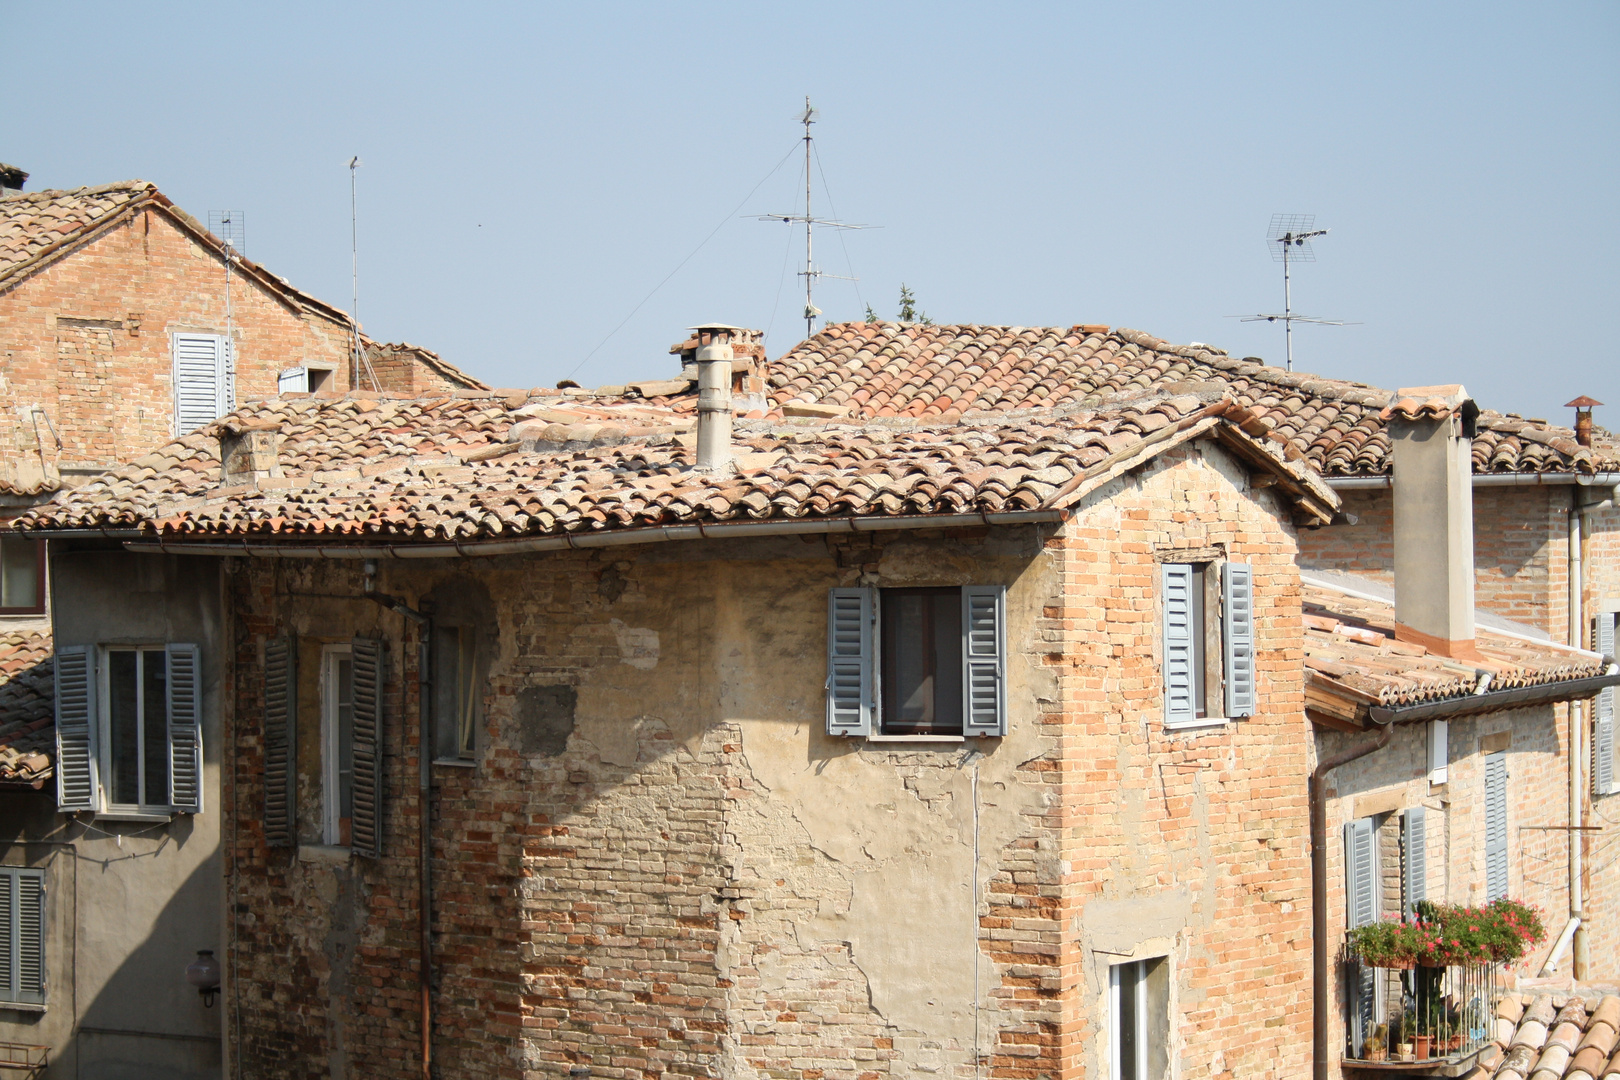 Roofs of Urbino